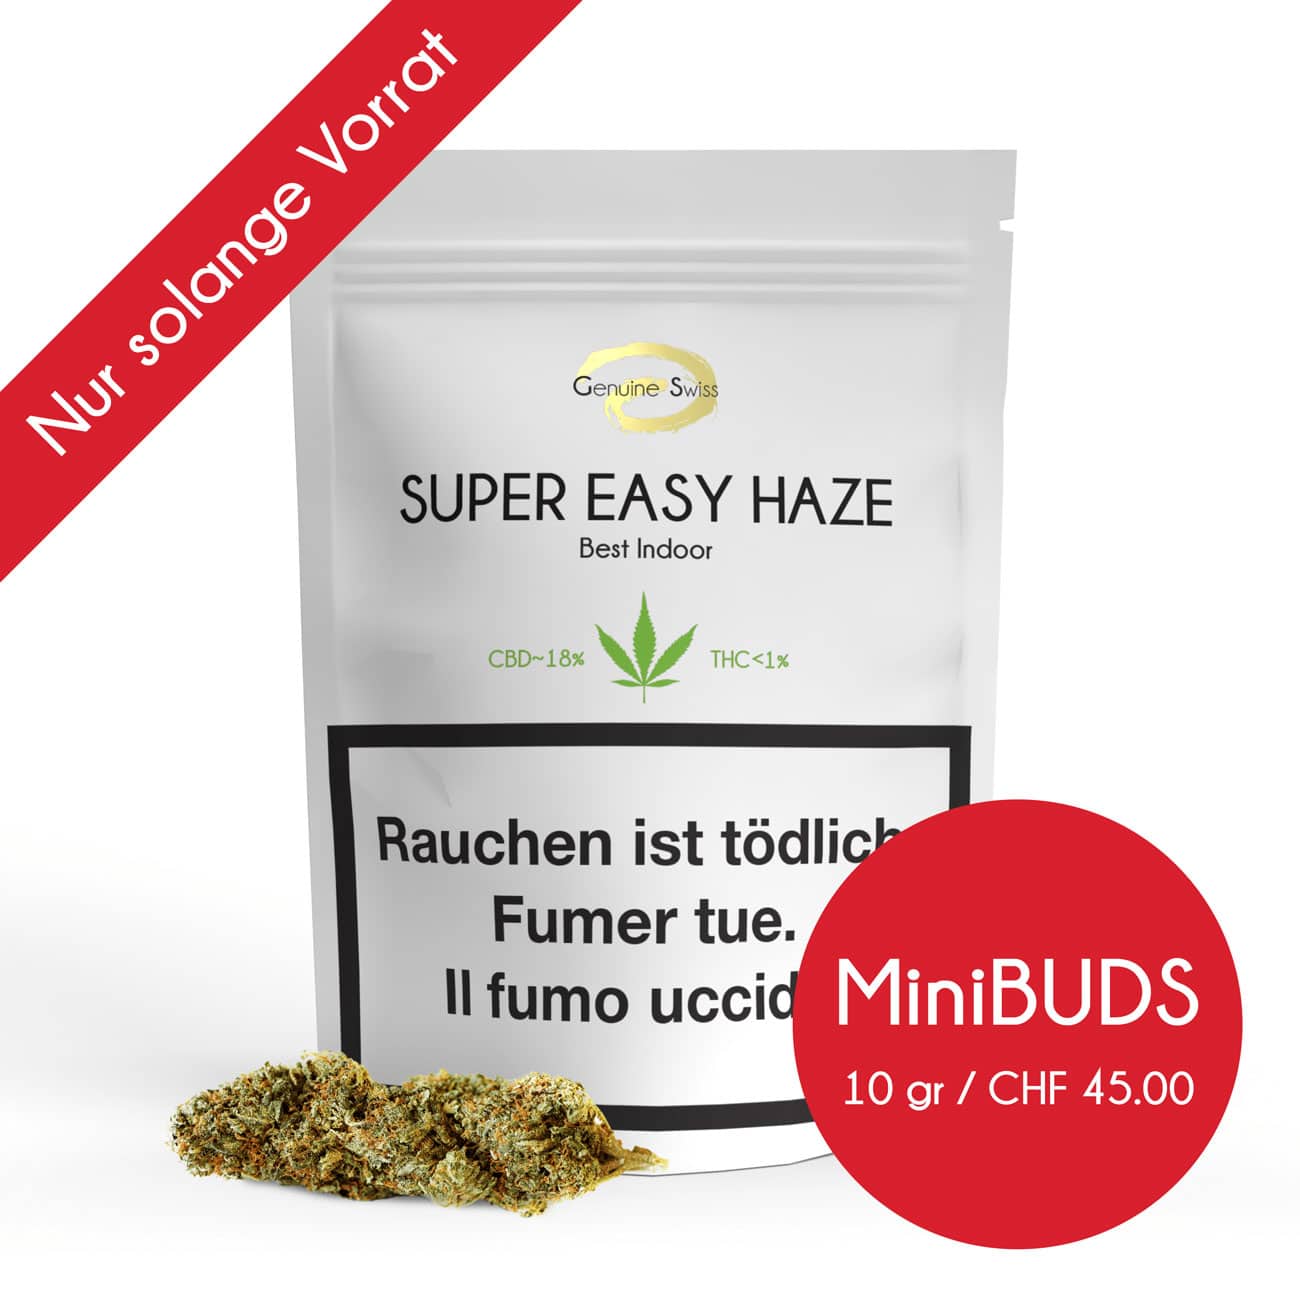 Genuine Swiss Super Easy Haze Minibuds, Genuine Swiss